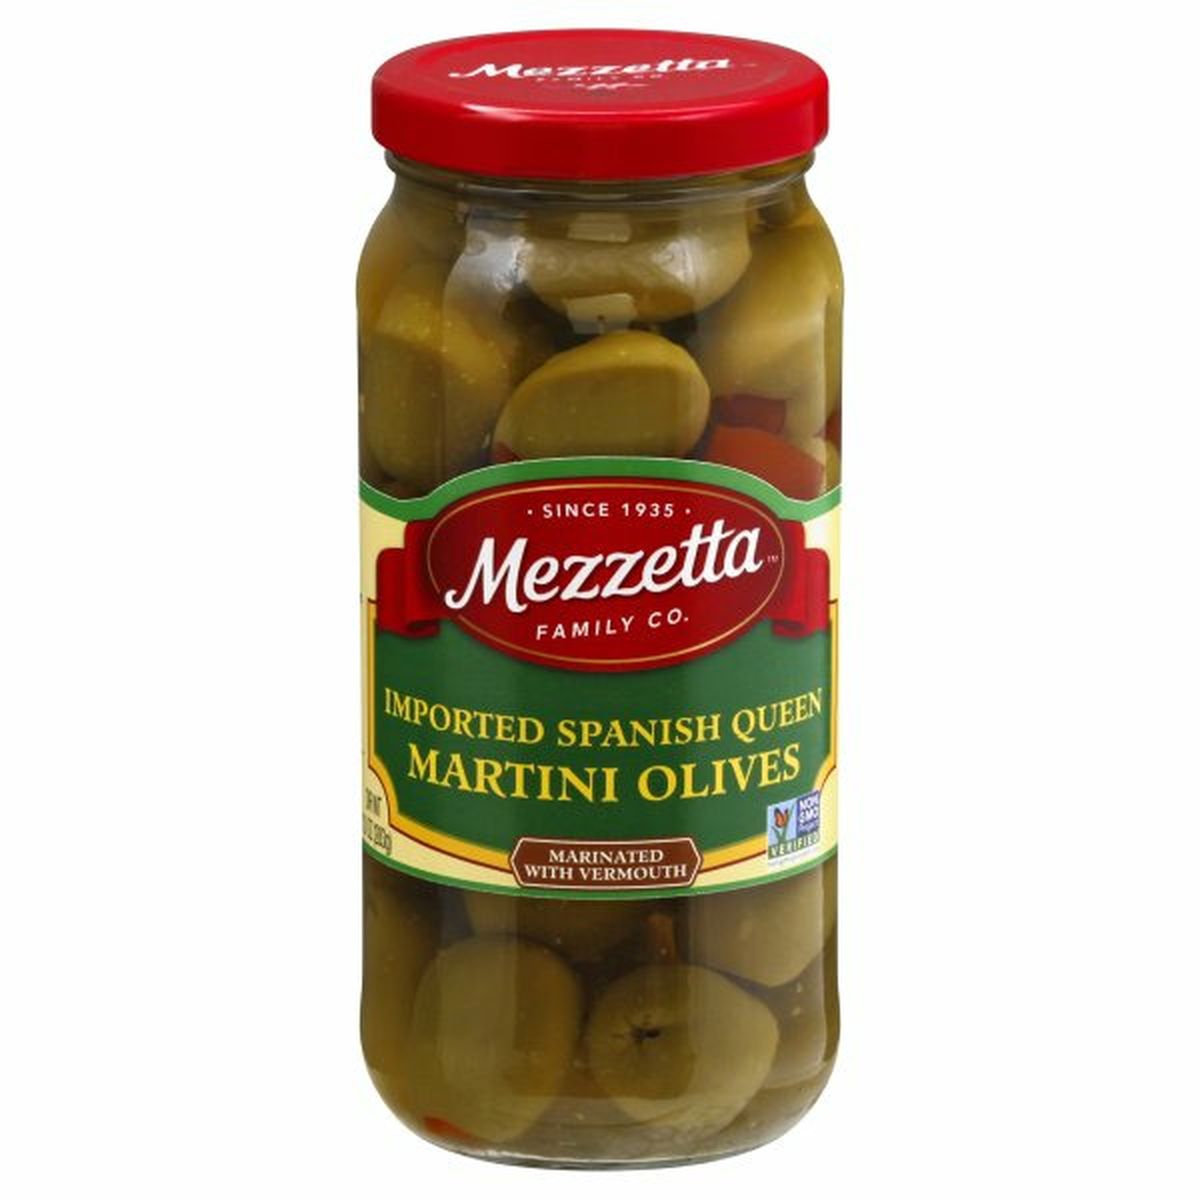 Calories in Mezzetta Martini Olives, Imported Spanish Queen